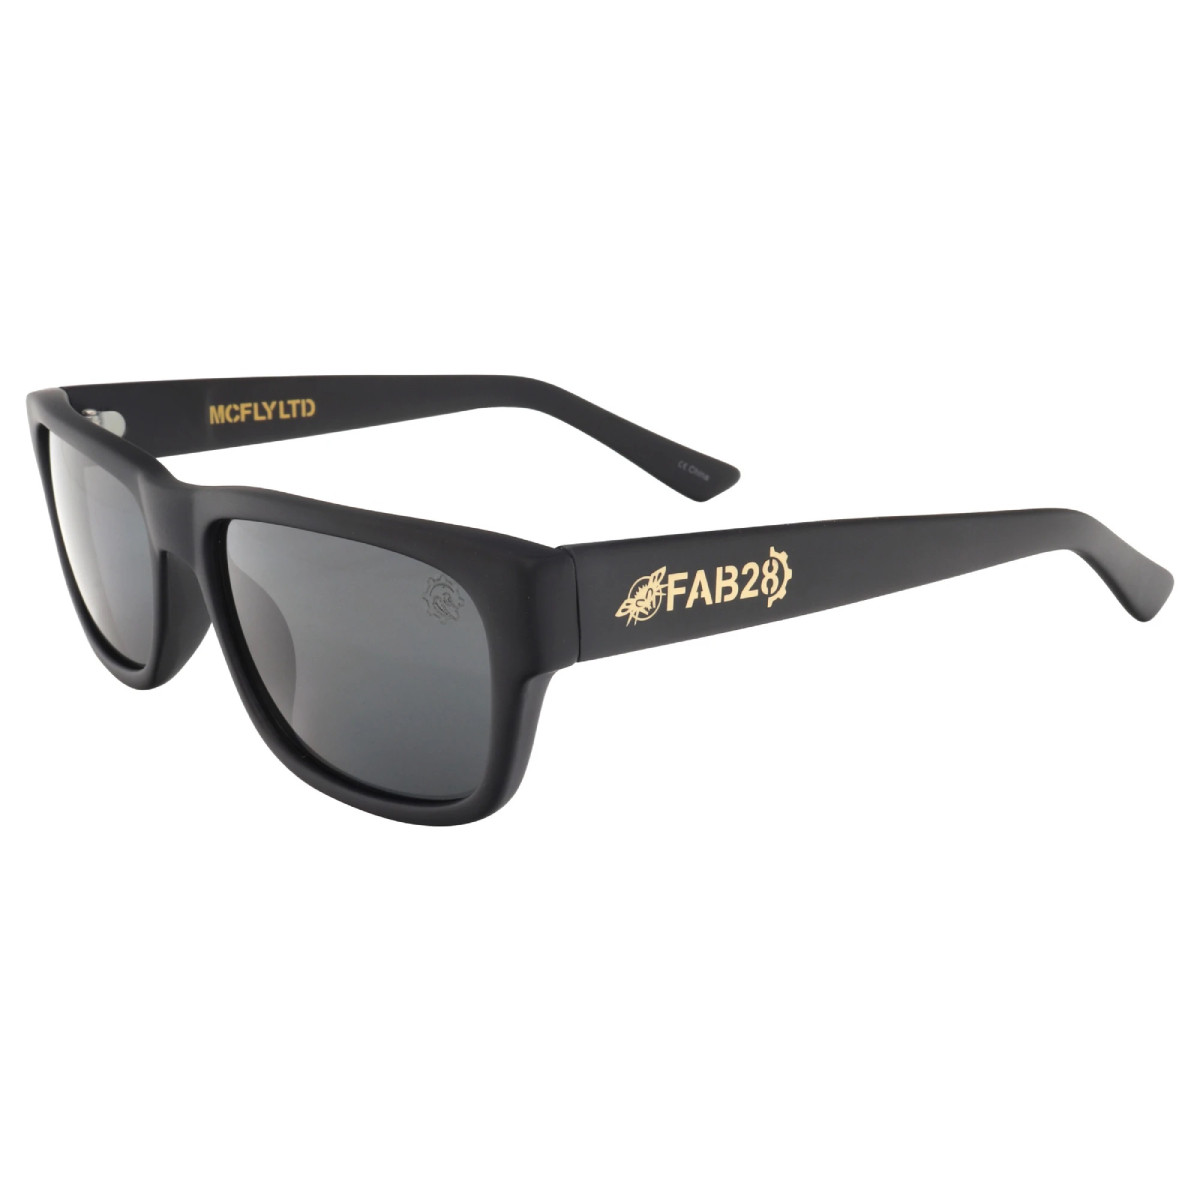 Black Flys FAB 28 McFly LTD Sunglasses - Matte Black - Smoke